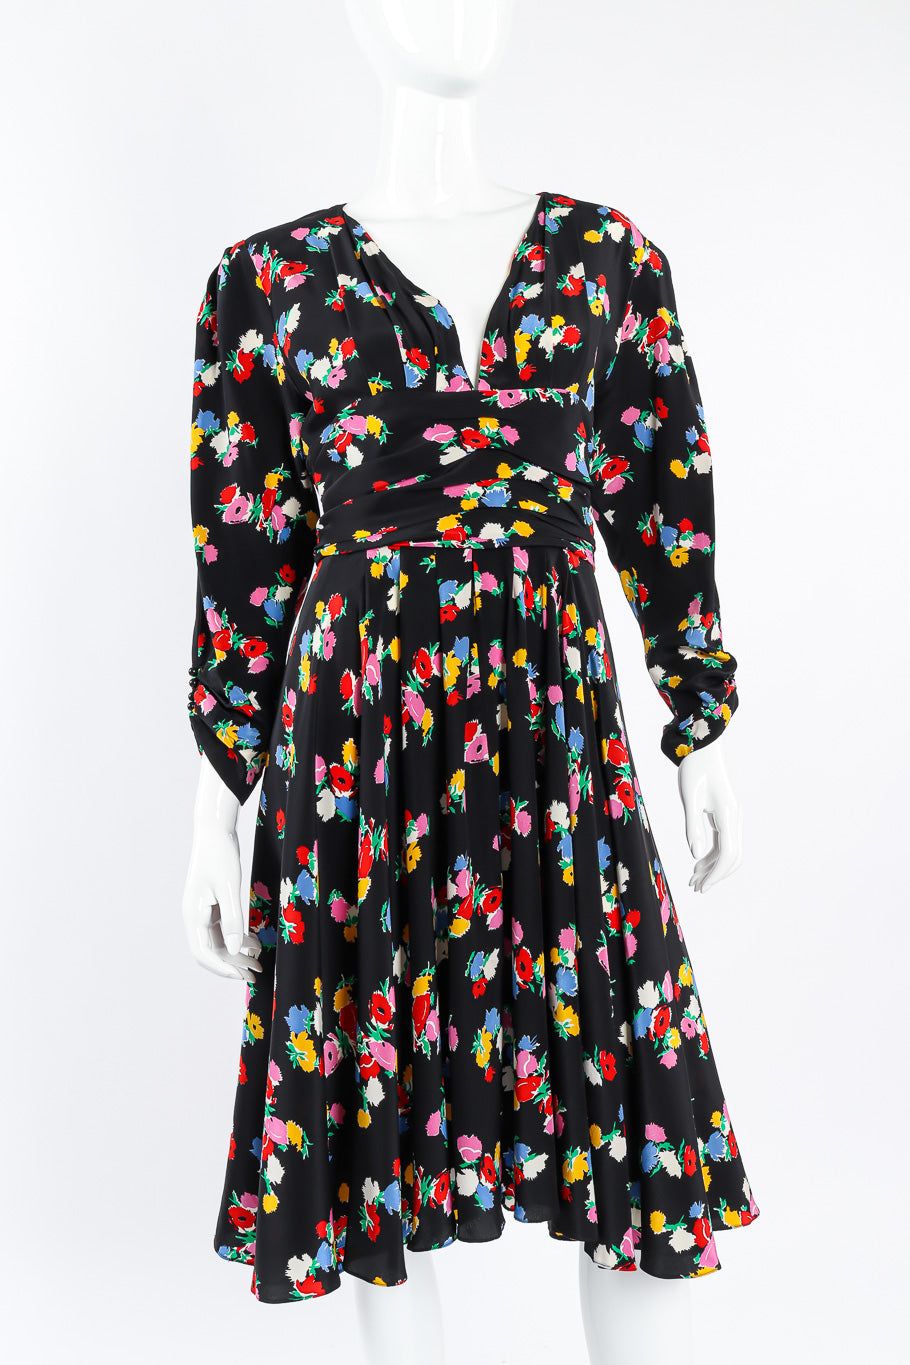 Nina Ricci silk floral print dress on mannequin @recessla